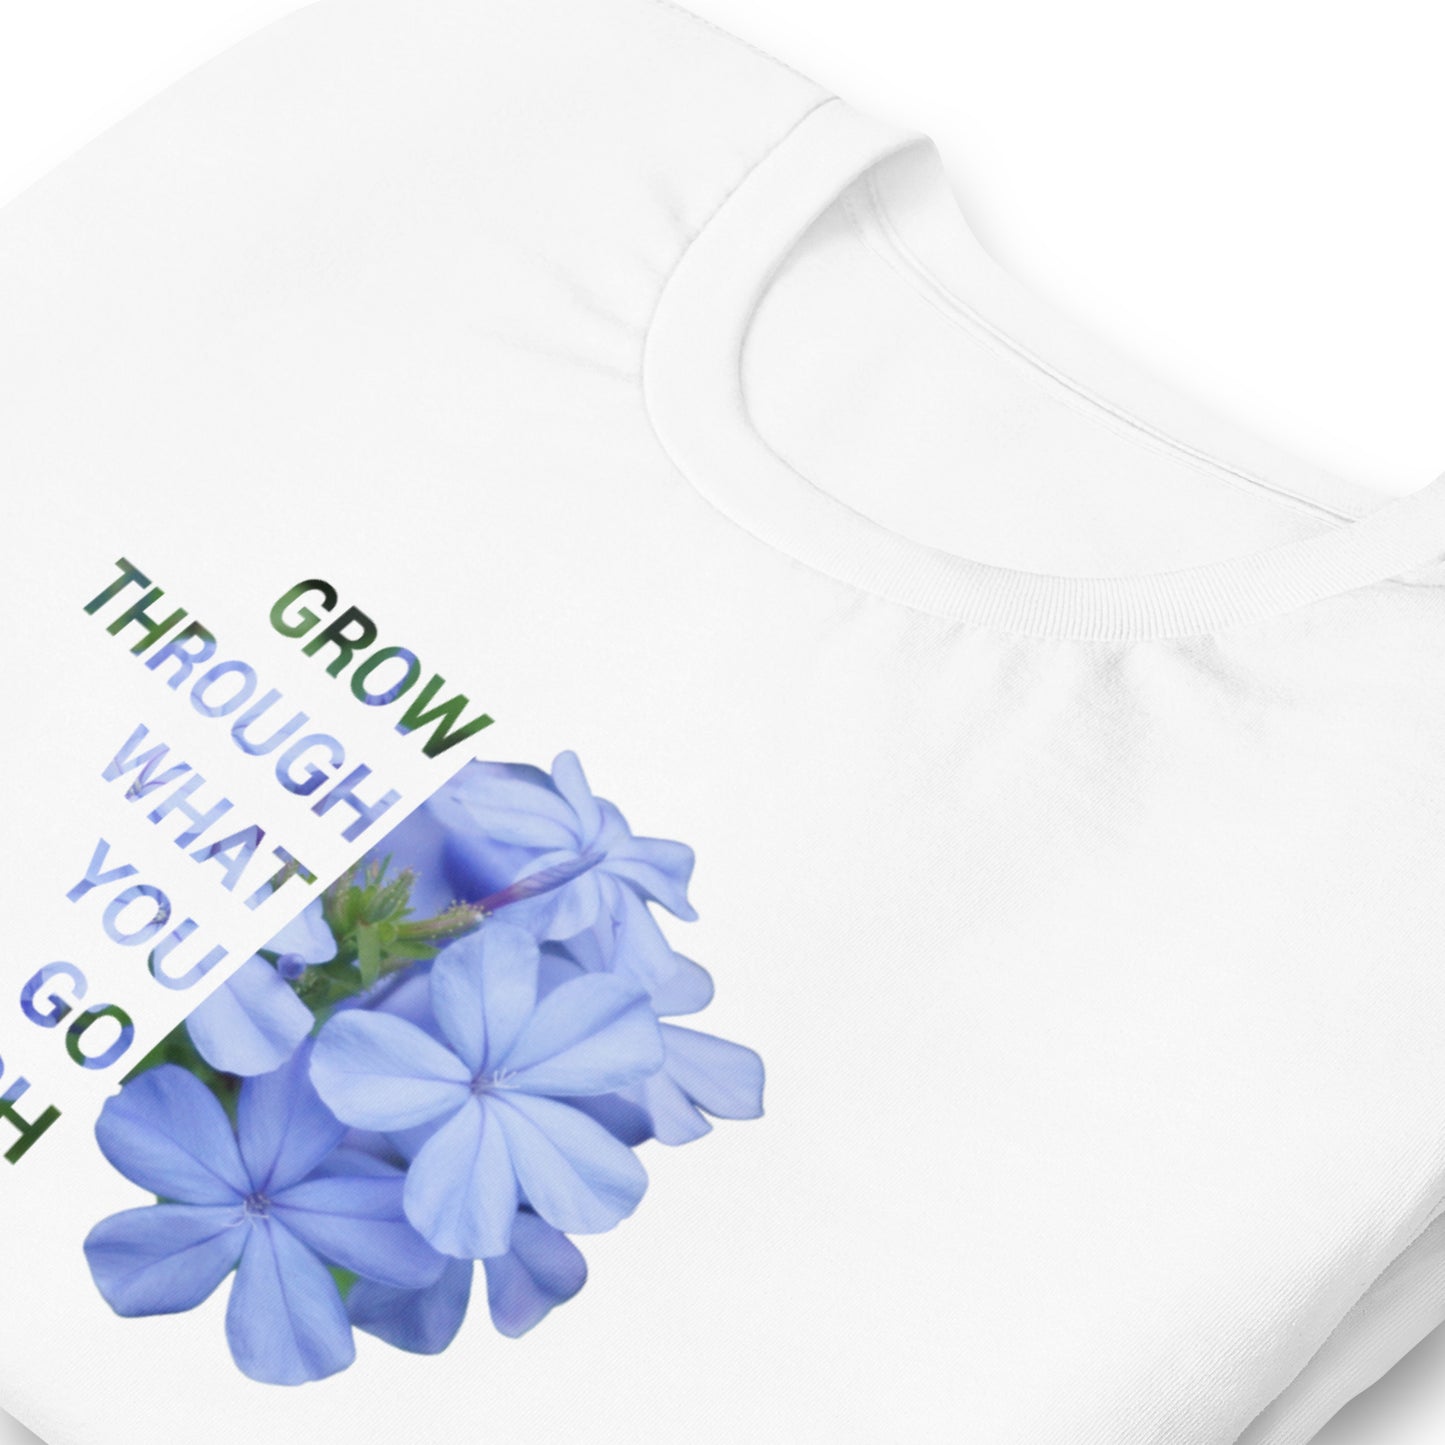 'Grow through what you go through'  Unisex t-shirt